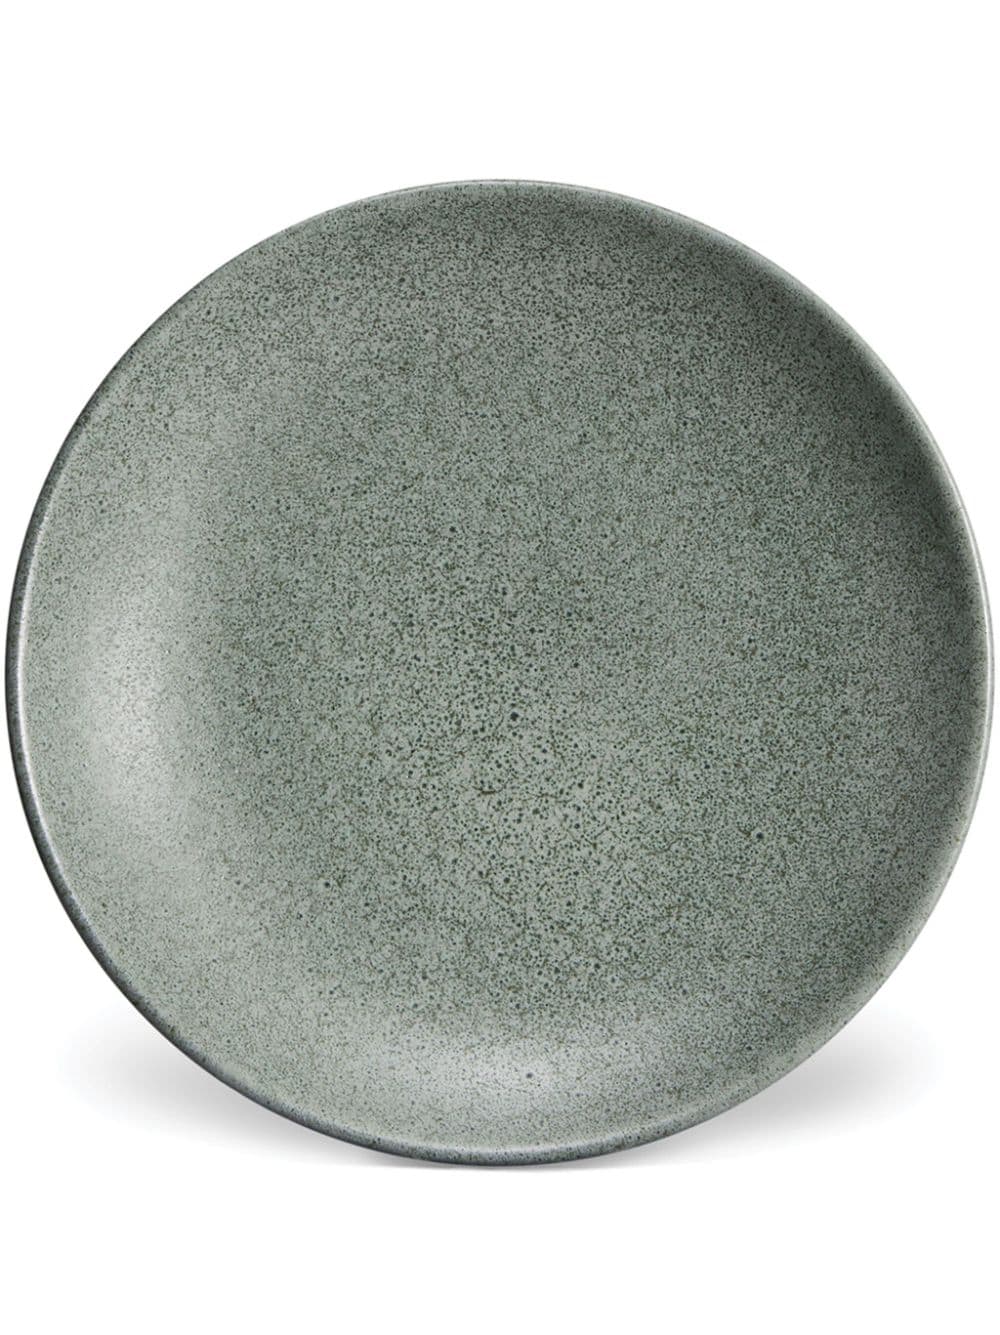 L'Objet Terra porcelain plate (16cm) - Green von L'Objet